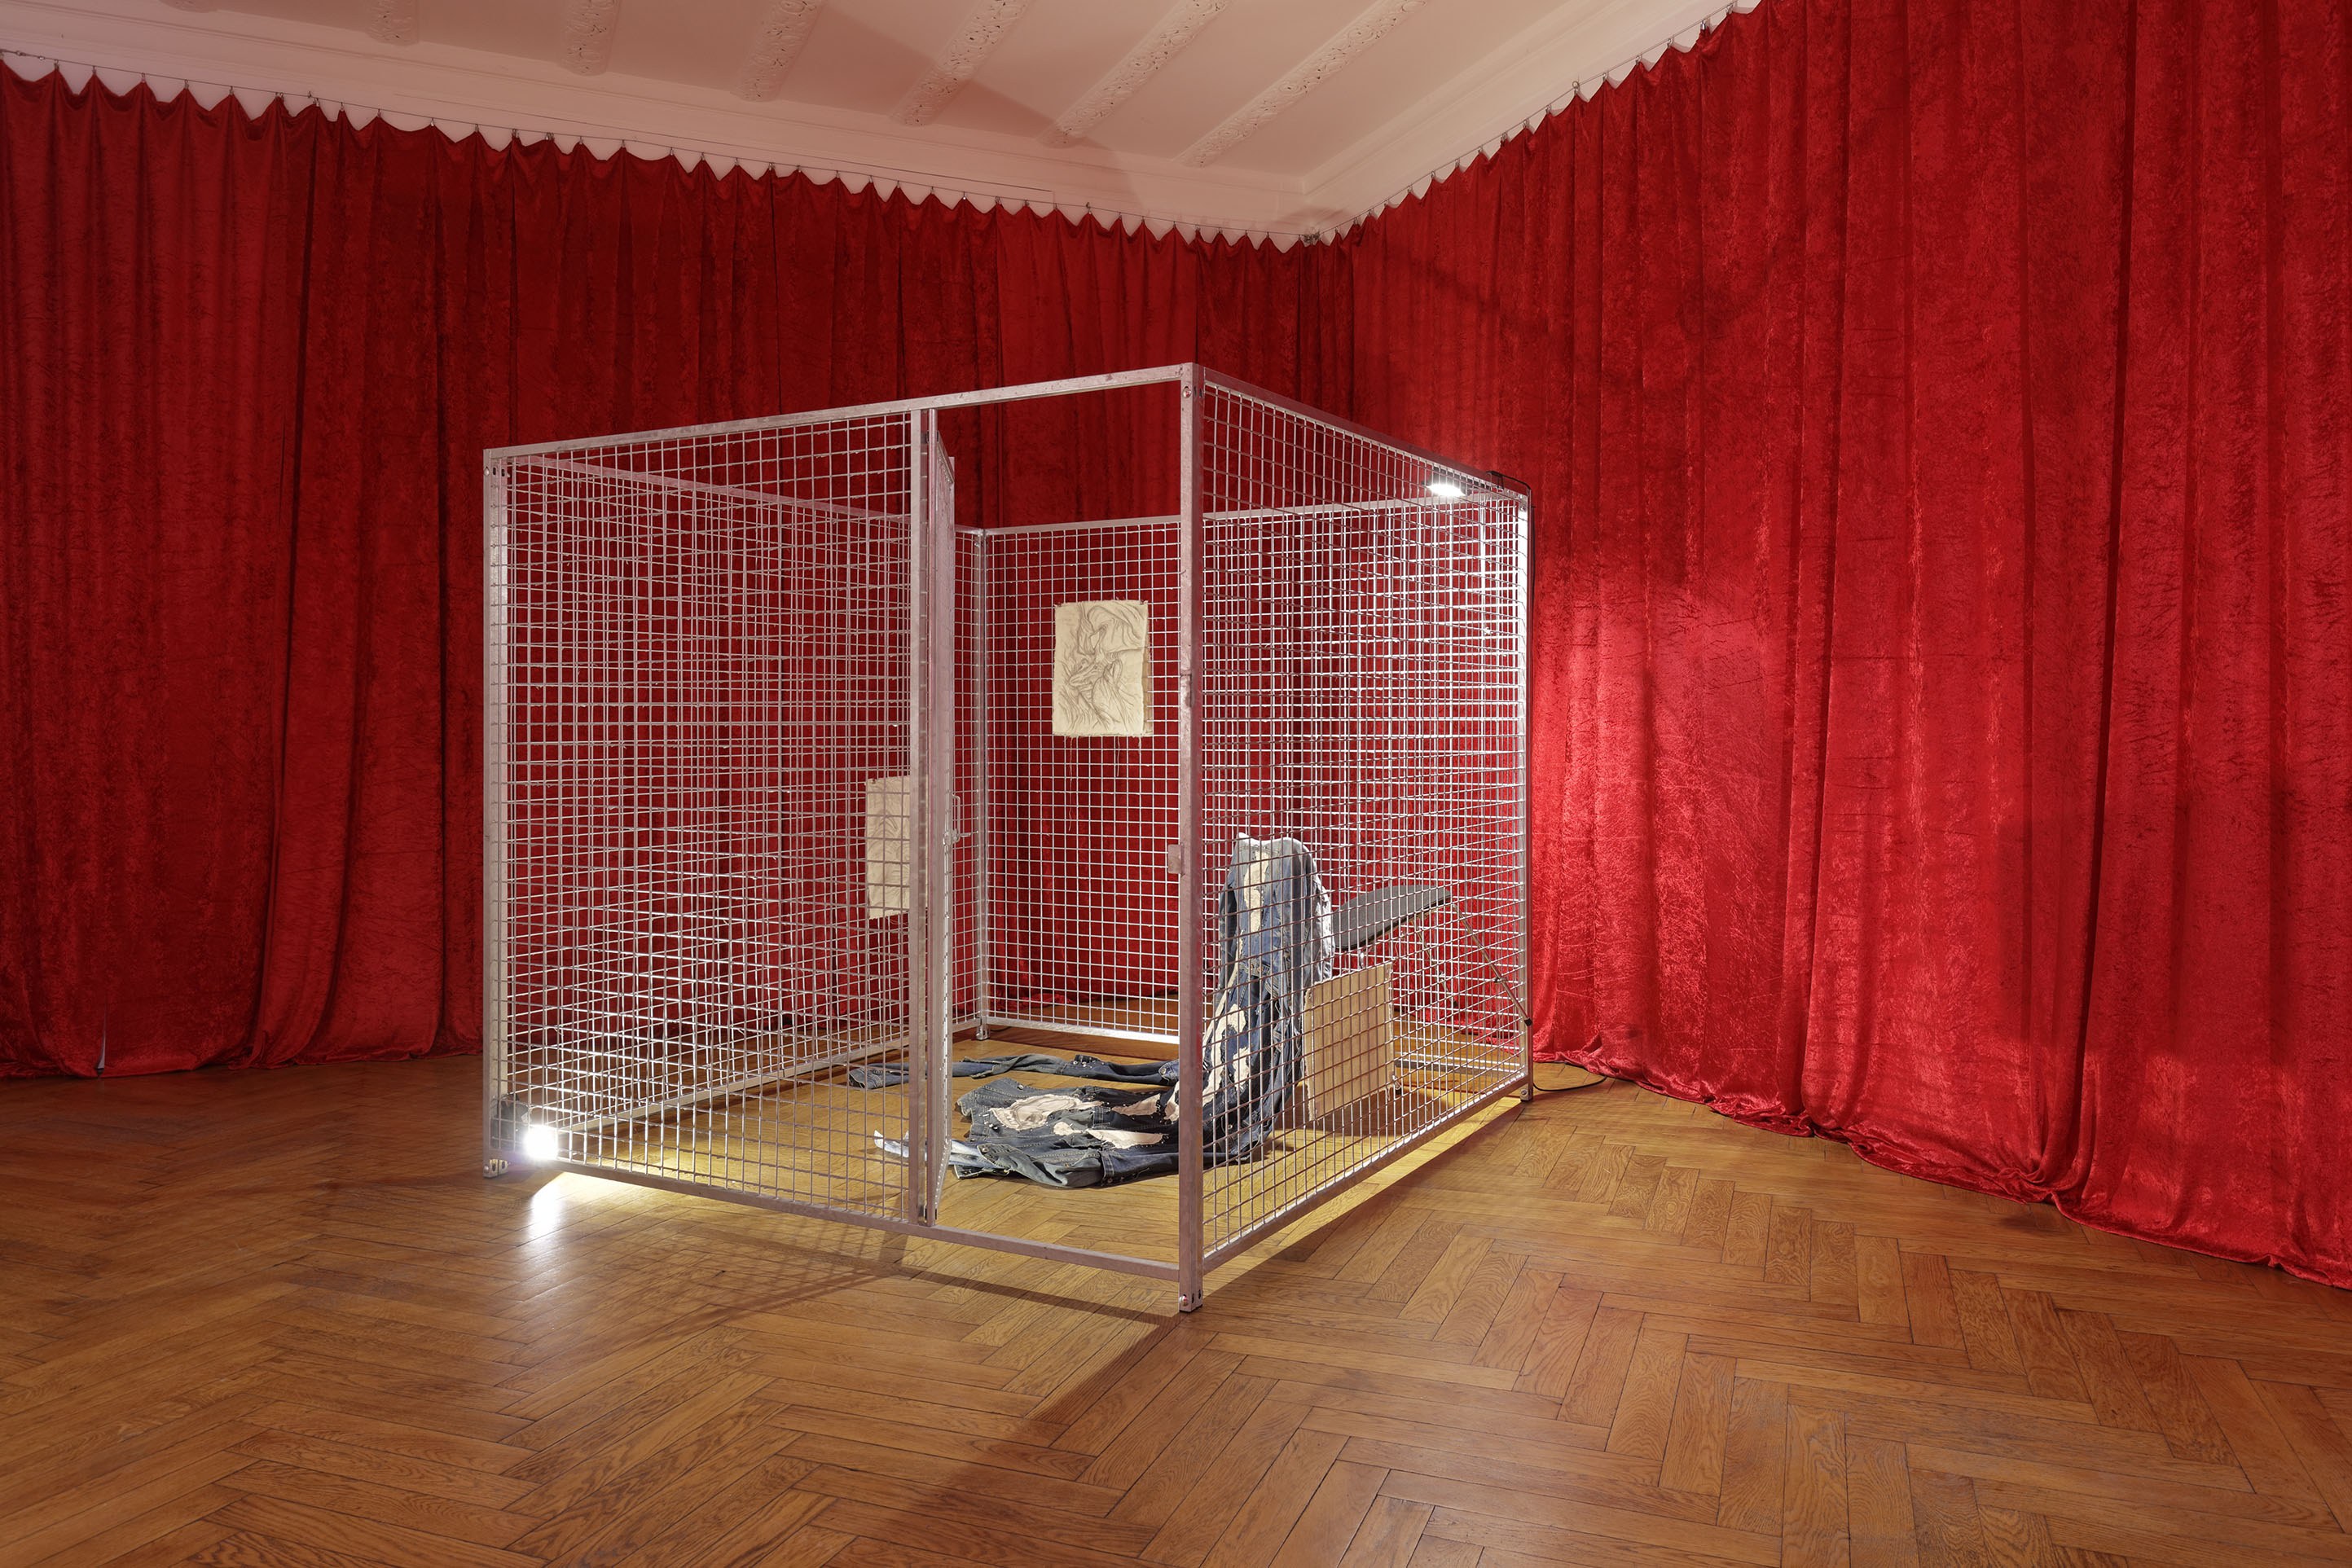 Rebekka Benzenberg, gossip girl, 2022, mixed media installation, 185 × 200 × 200 cm